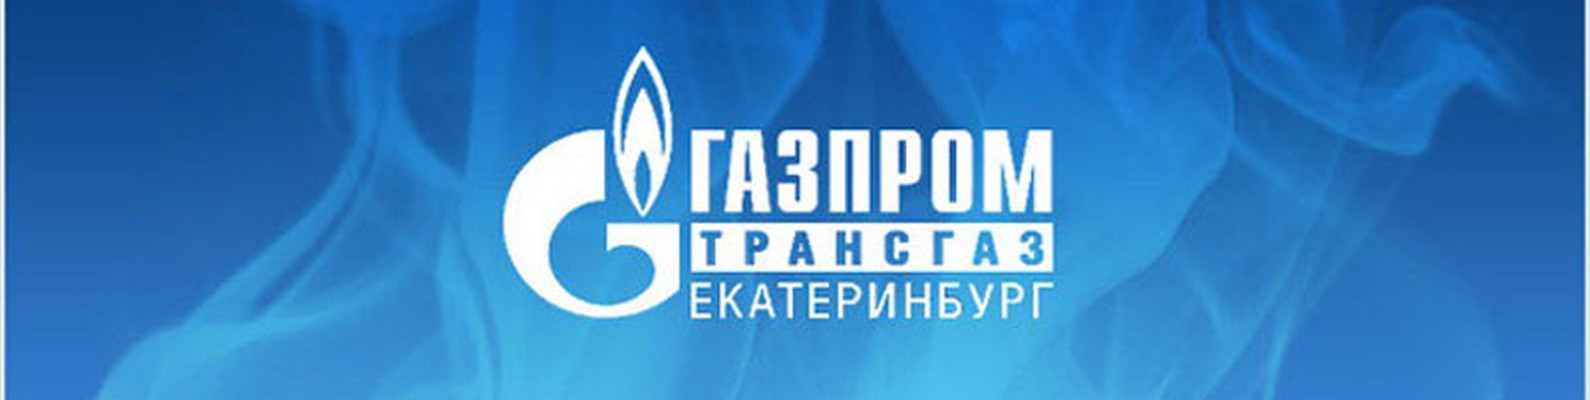 Газпром трансгаз Екатеринбург, ООО